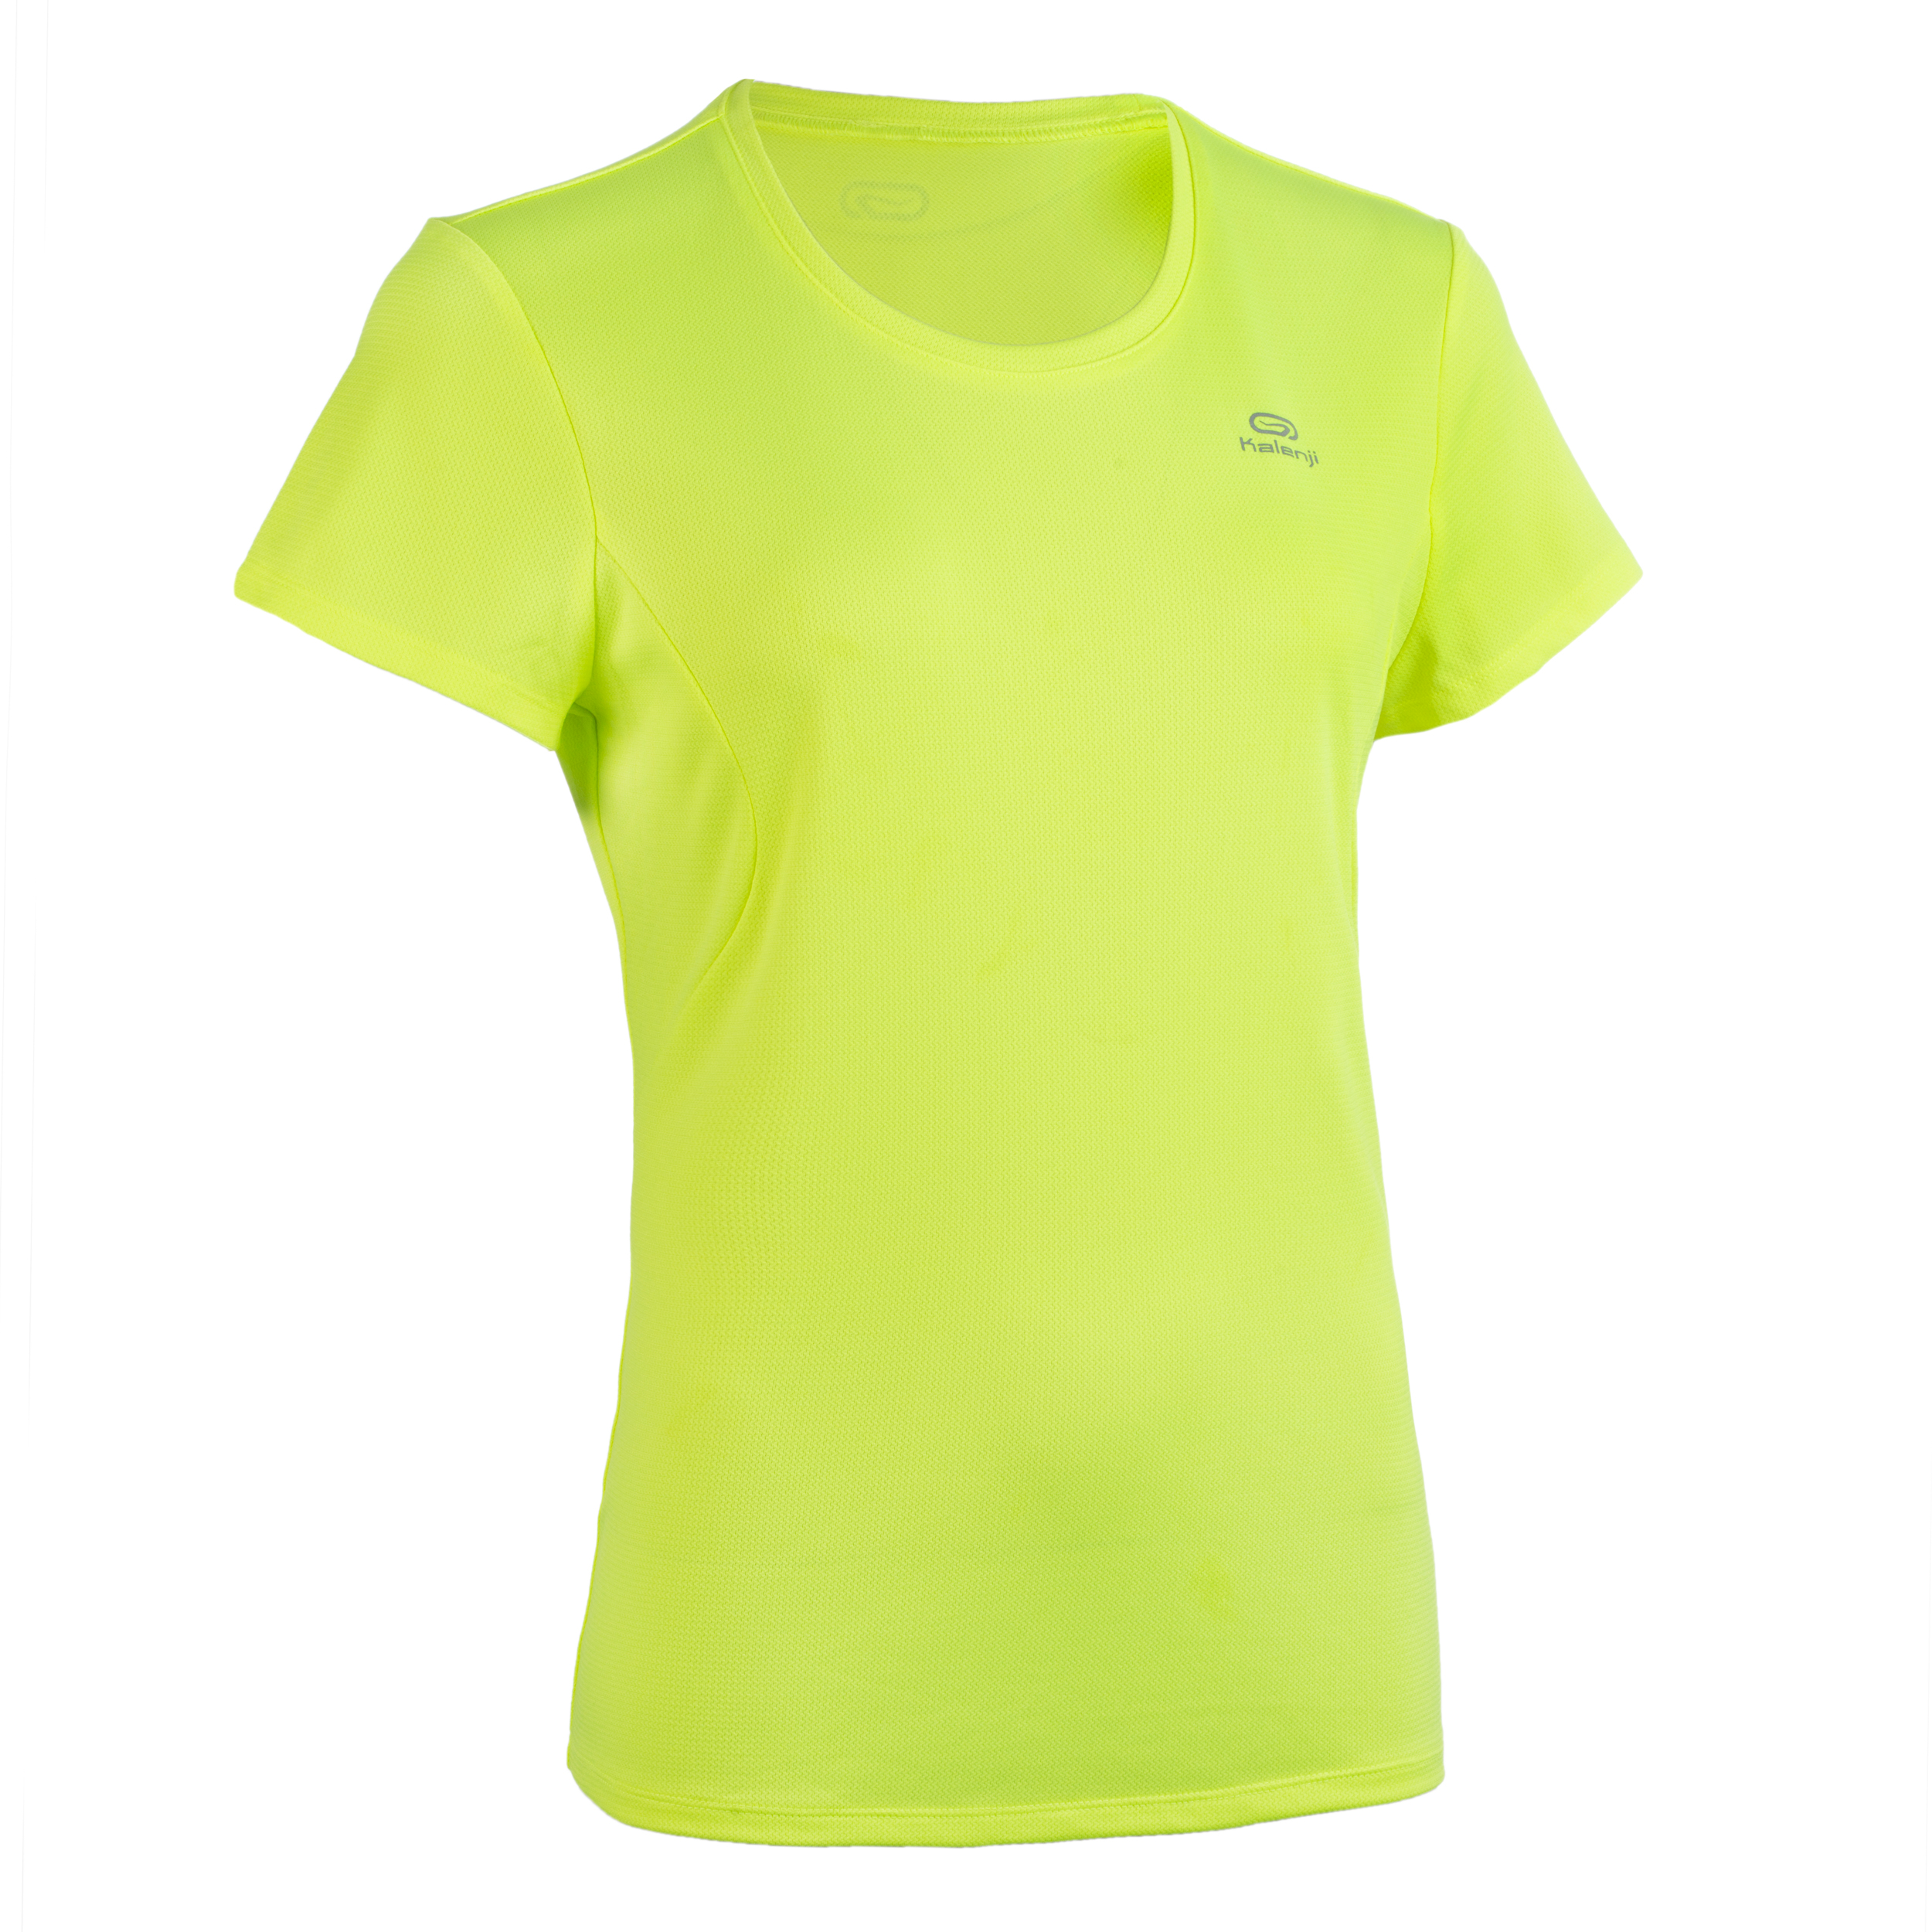 Tee Shirt Athlétisme femme club personnalisable jaune fluo